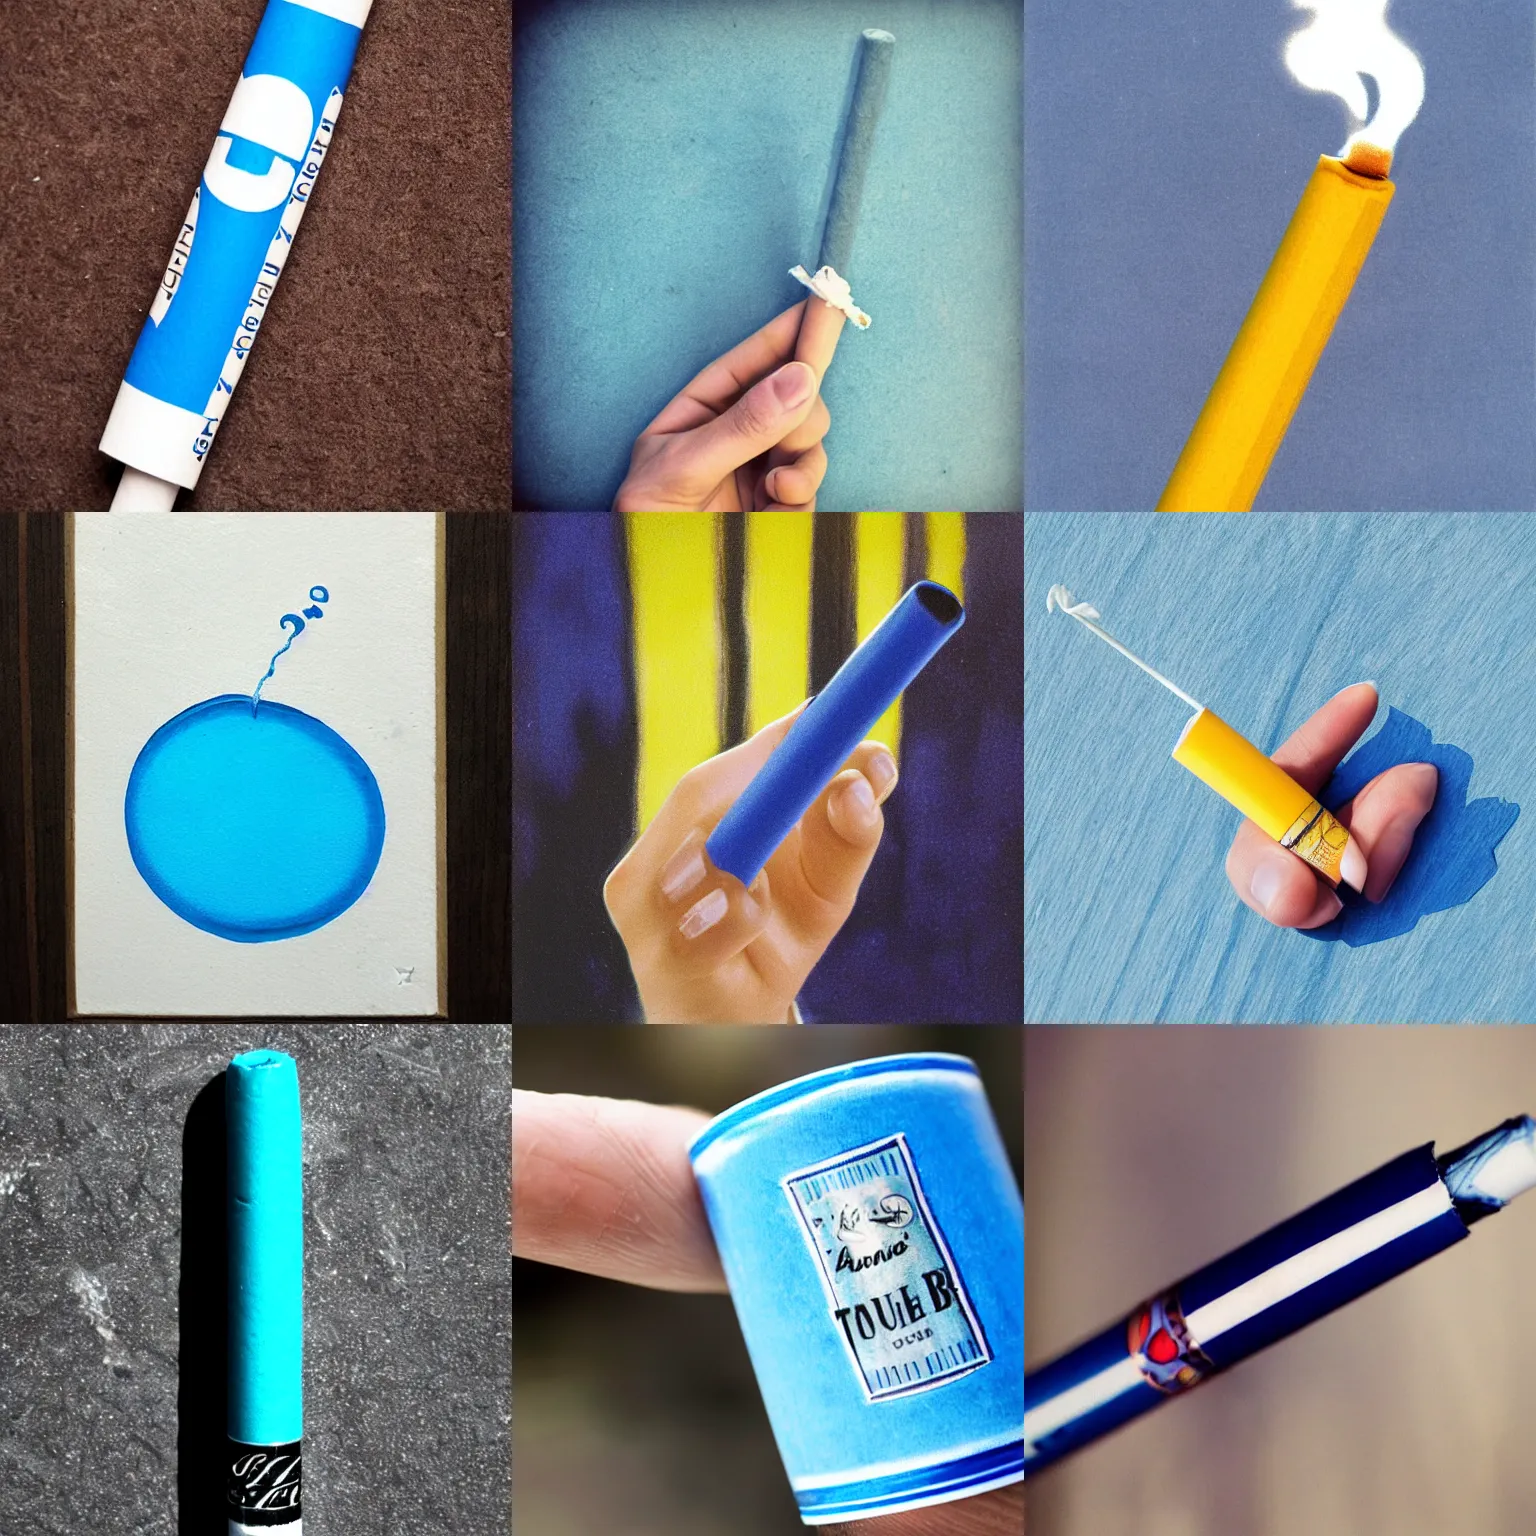 Prompt: touch blue cigarette